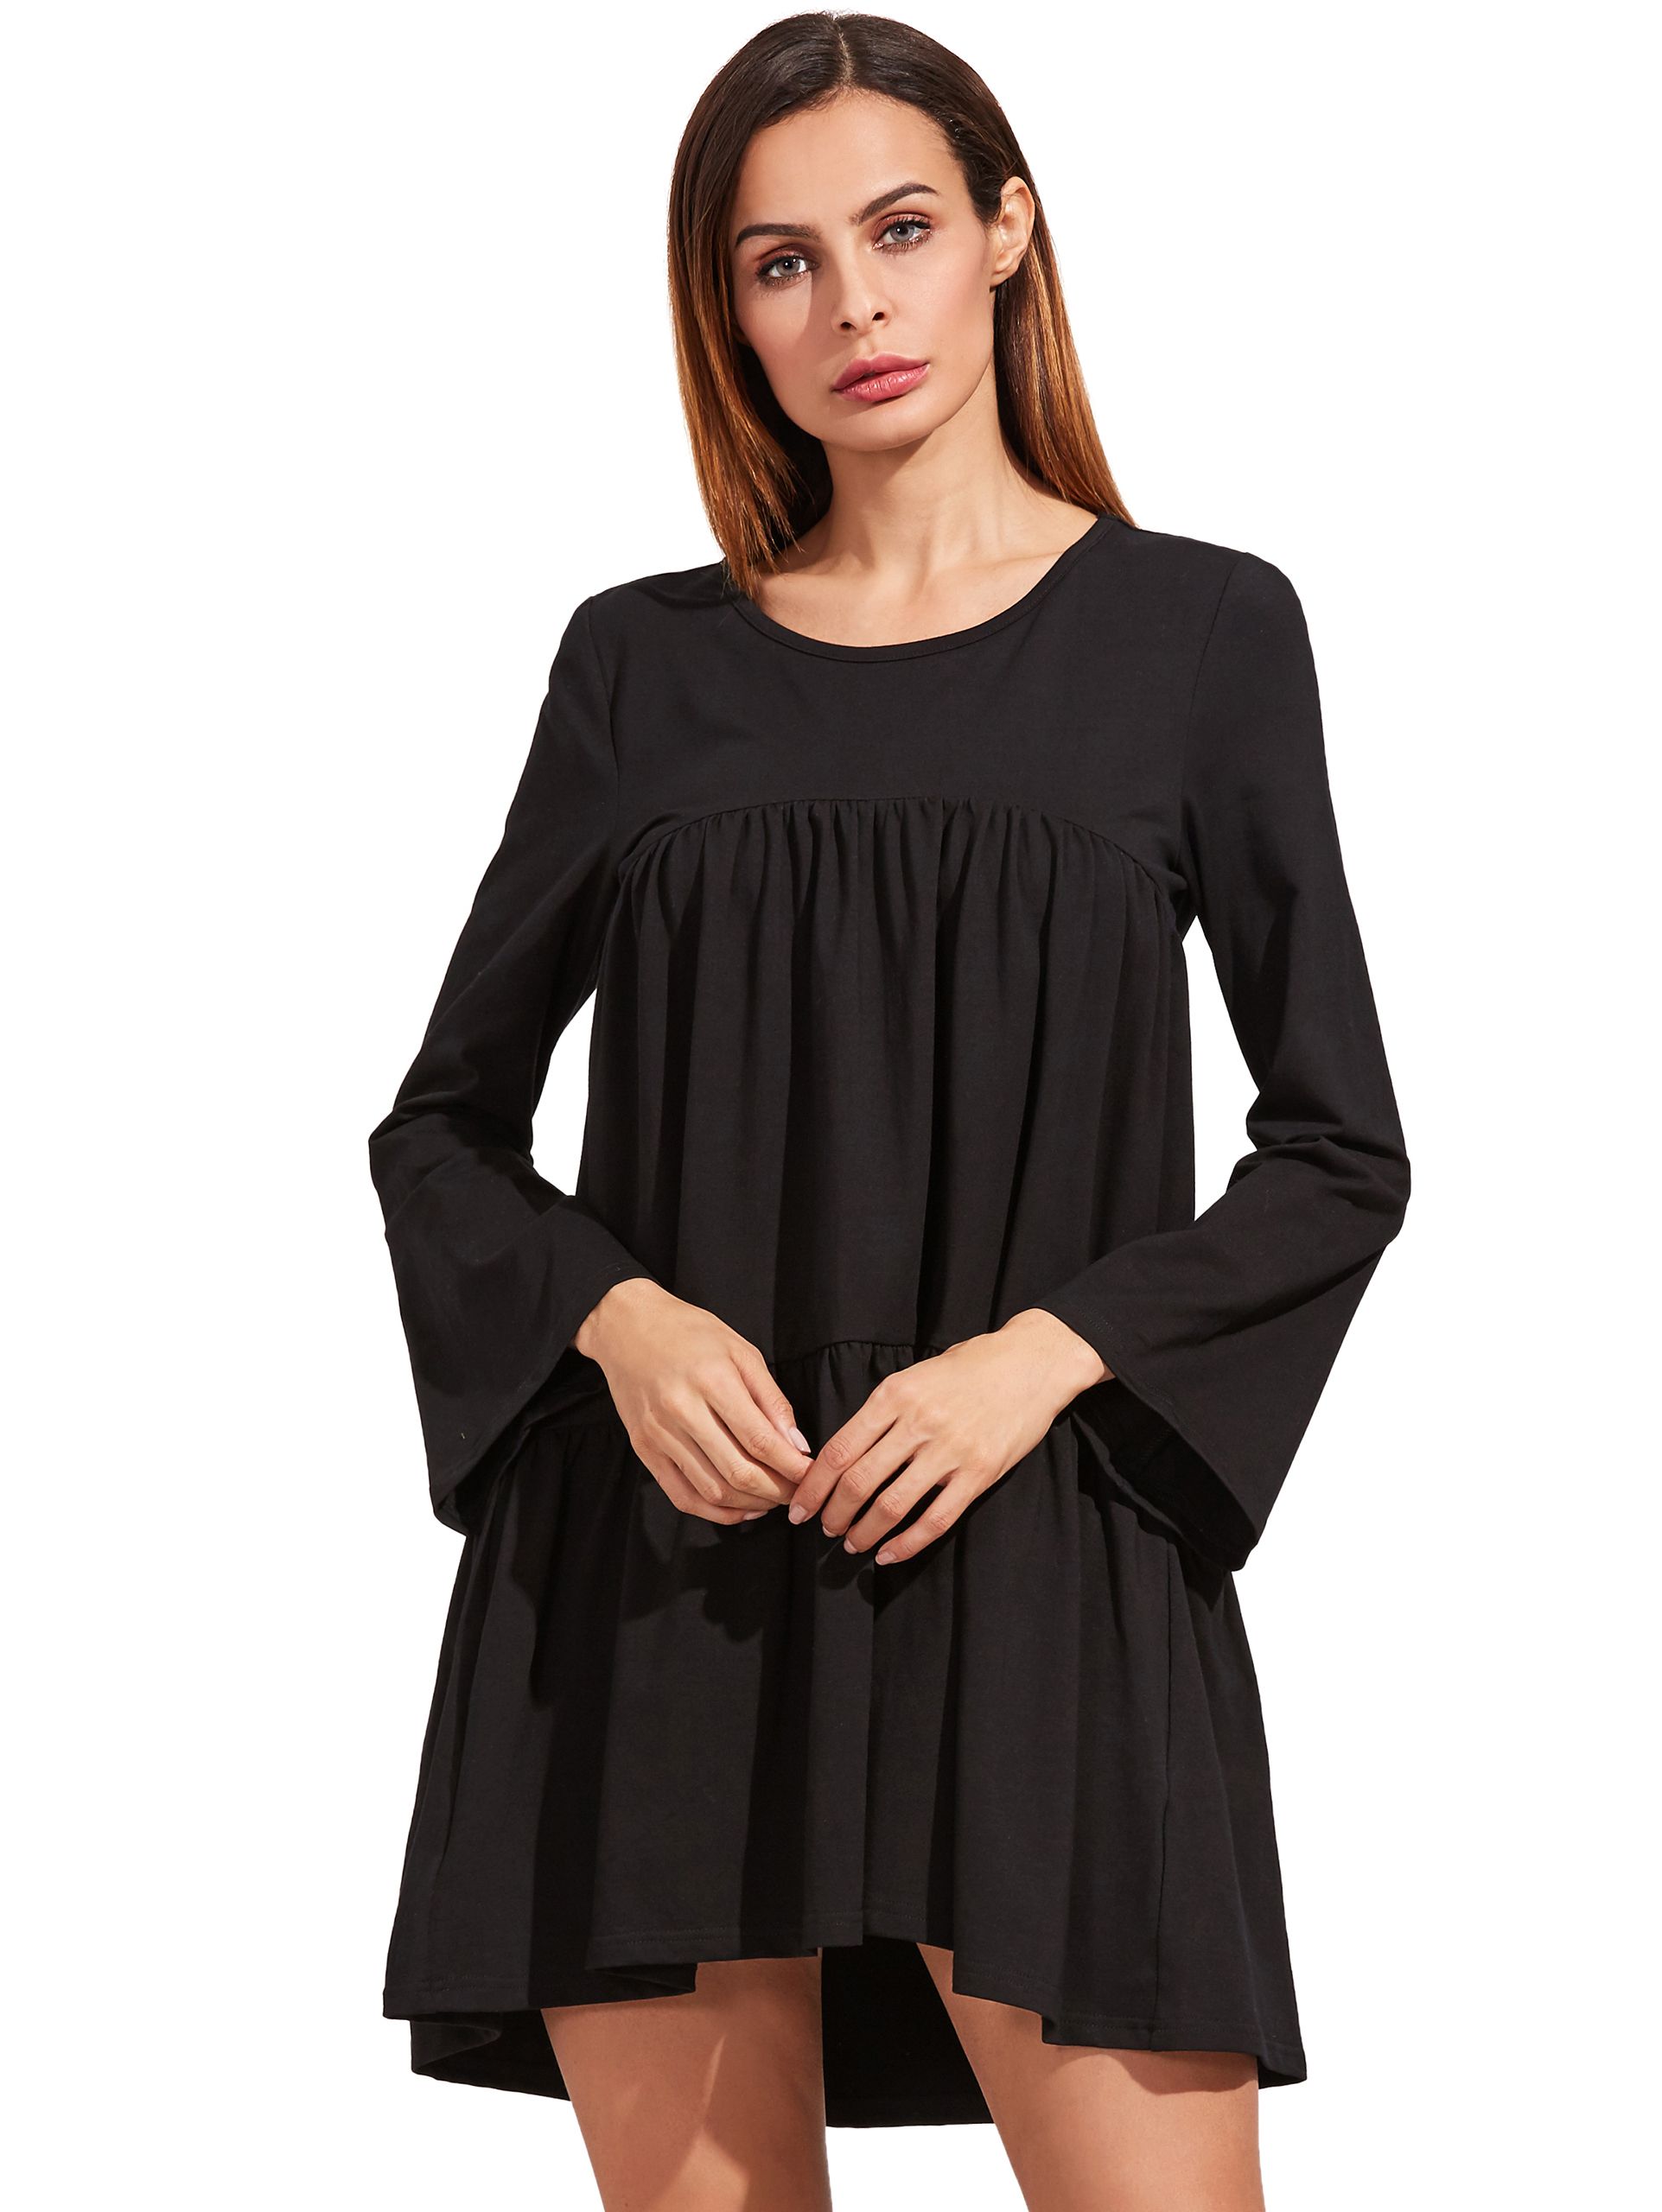 Black Long Sleeve Ruffle Dress